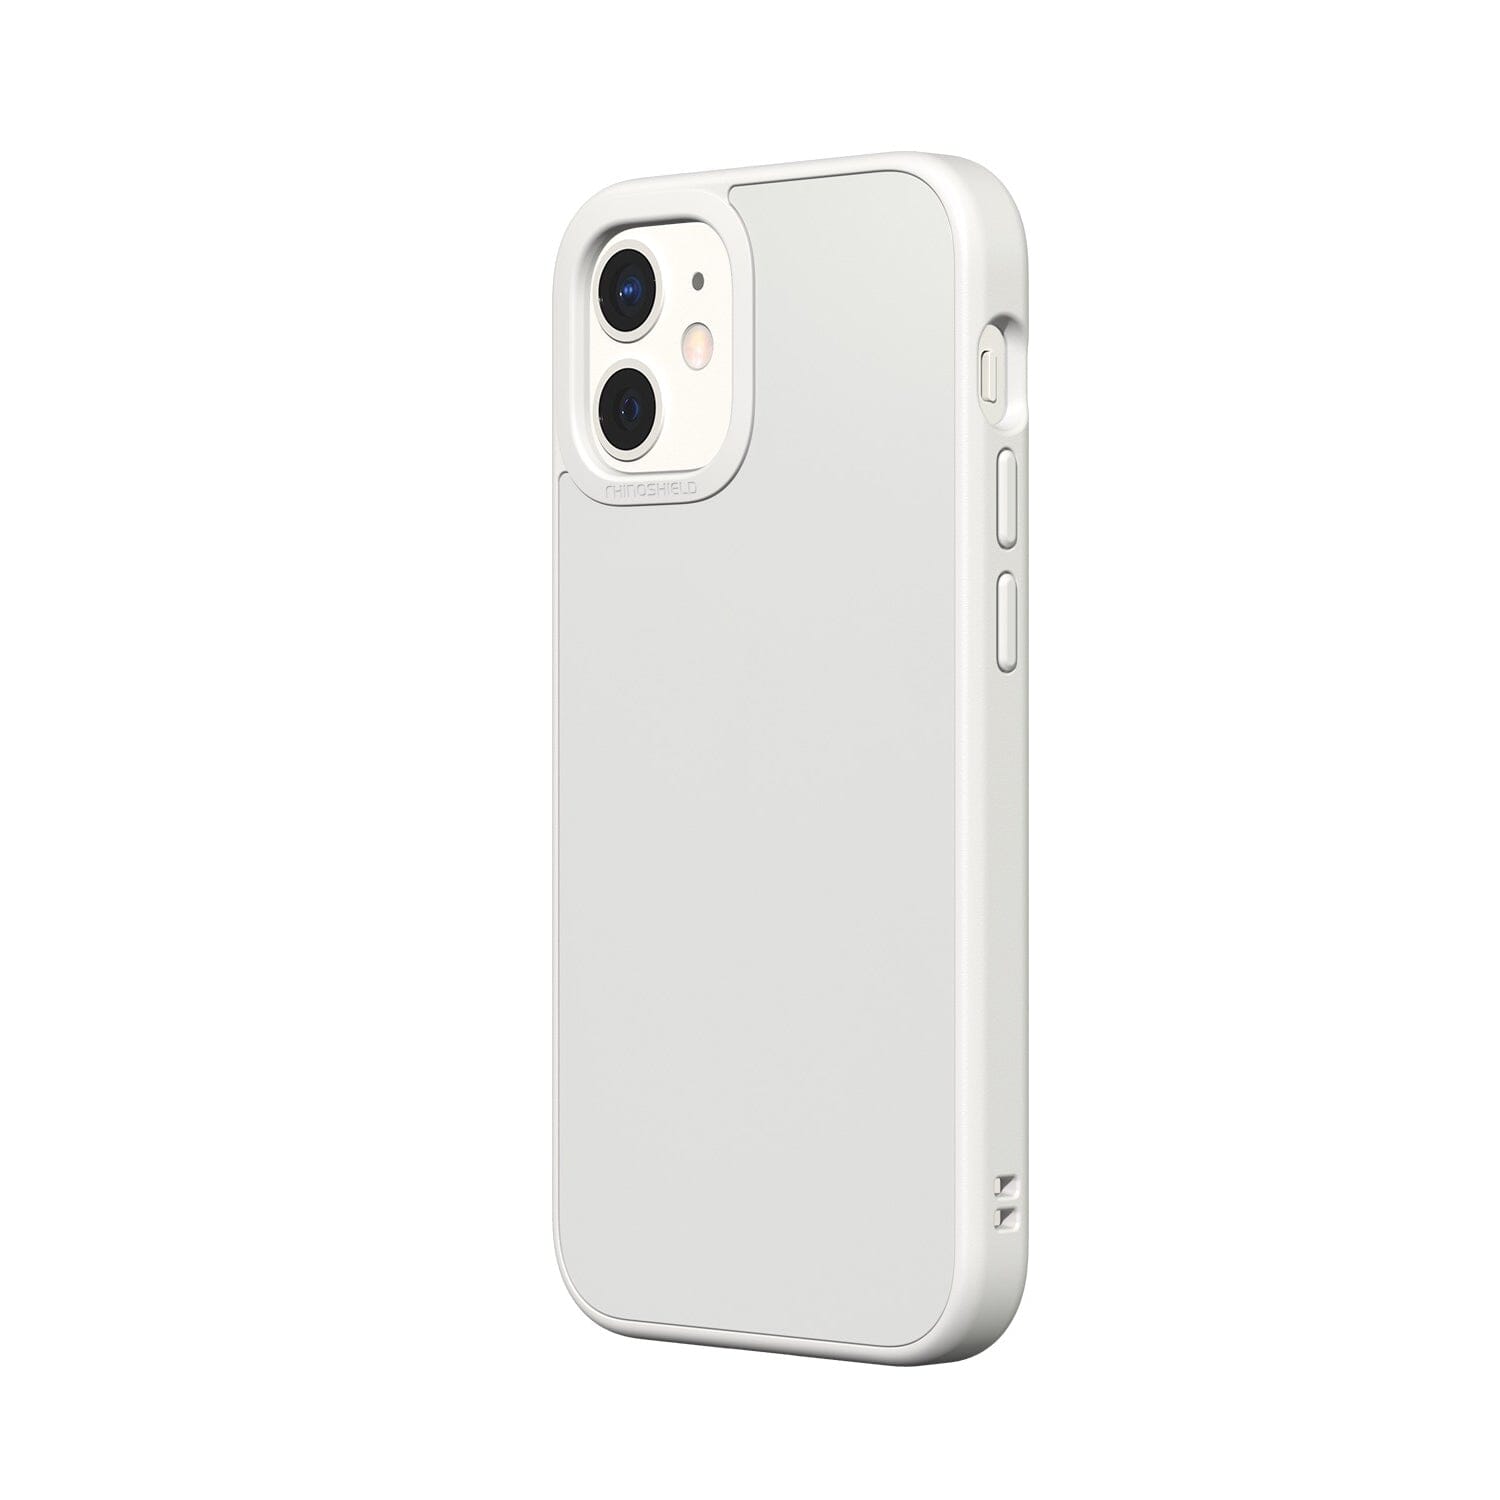 RhinoShield SolidSuit Protective Case with Premium Finish for iPhone 12 Series (2020) iPhone 12 Series RhinoShield iPhone 12 mini 5.4" Classic White 